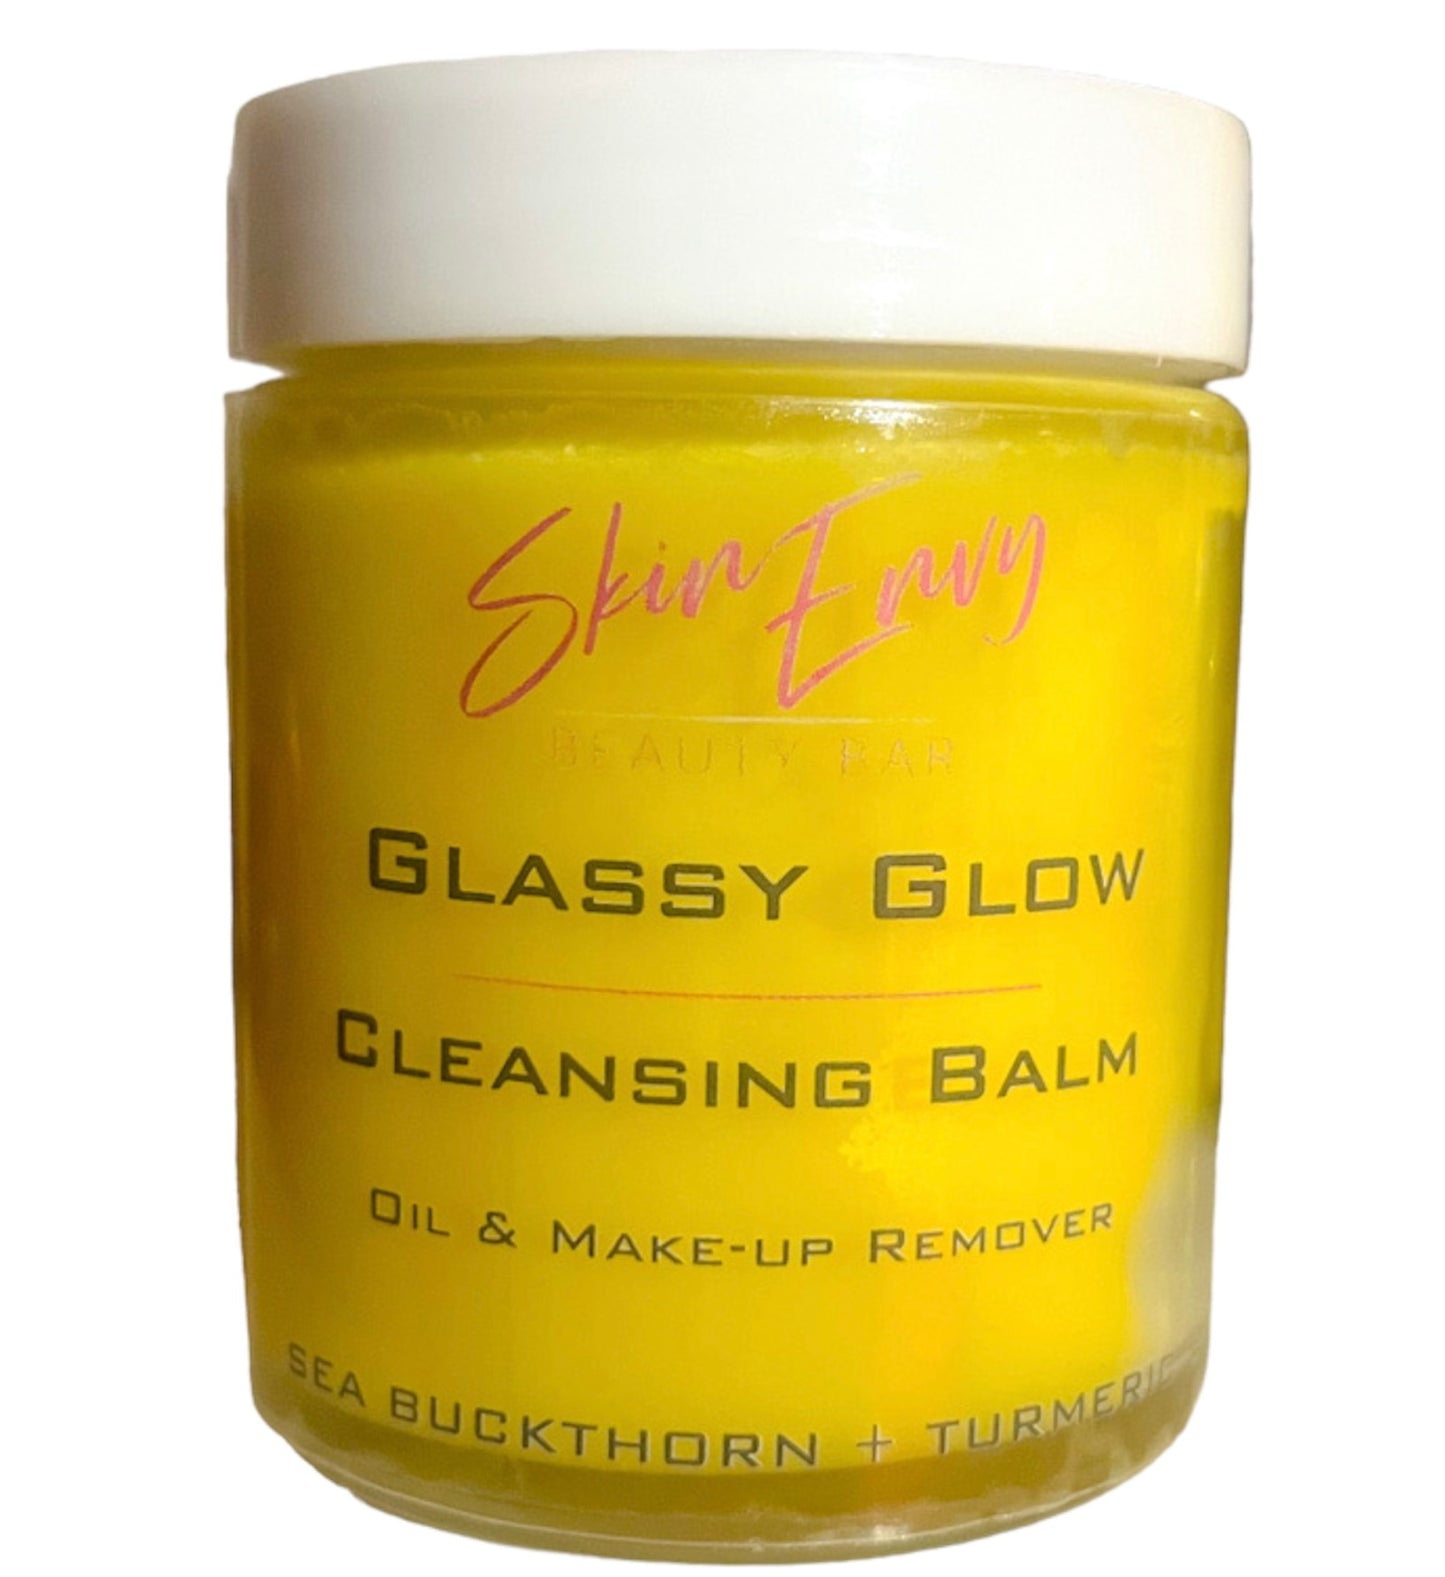 Glassy Glow Cleansing balm